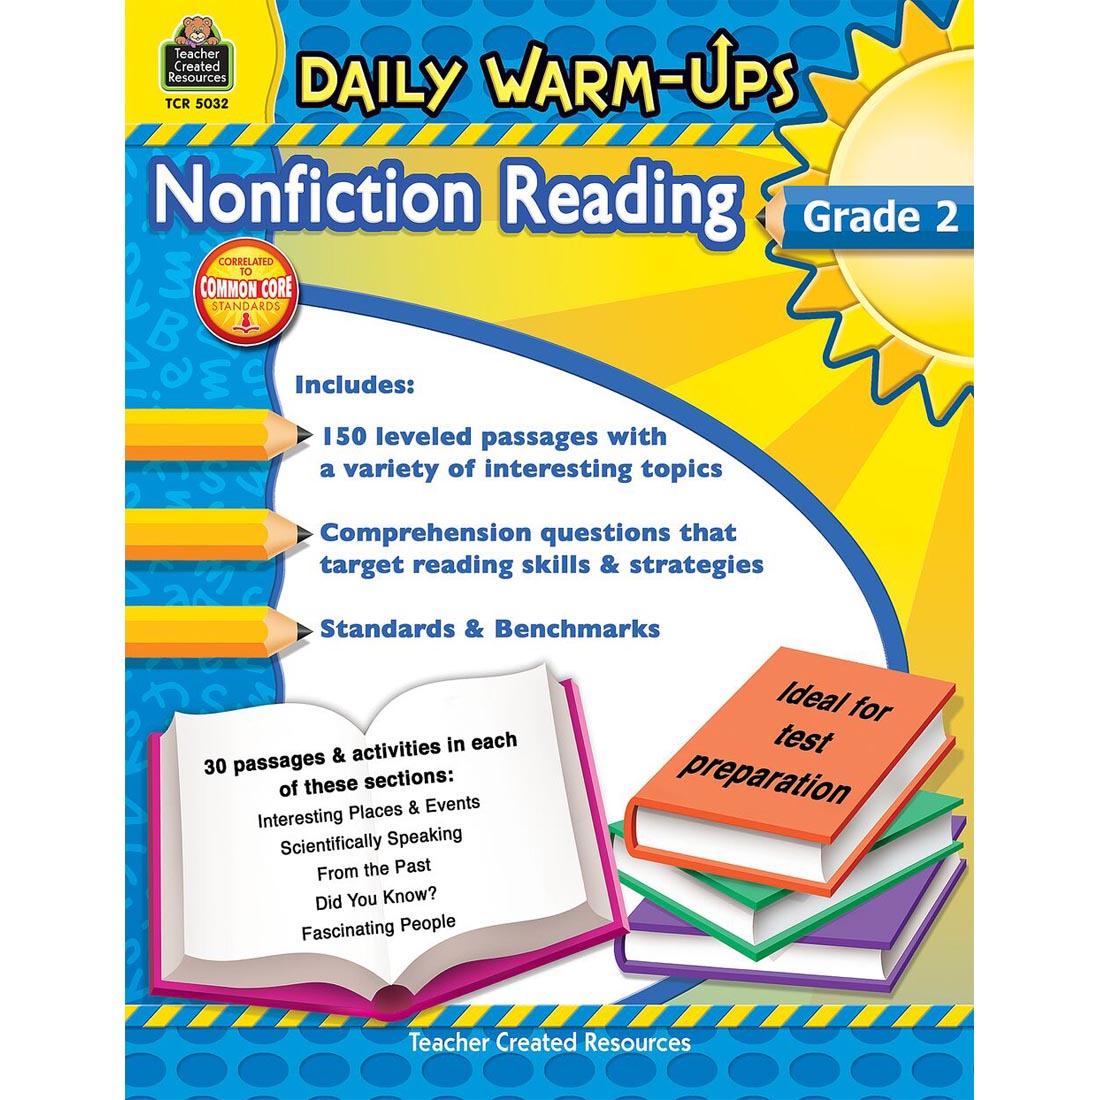 Daily Warm-Ups Book Nonfiction Reading Grade 2